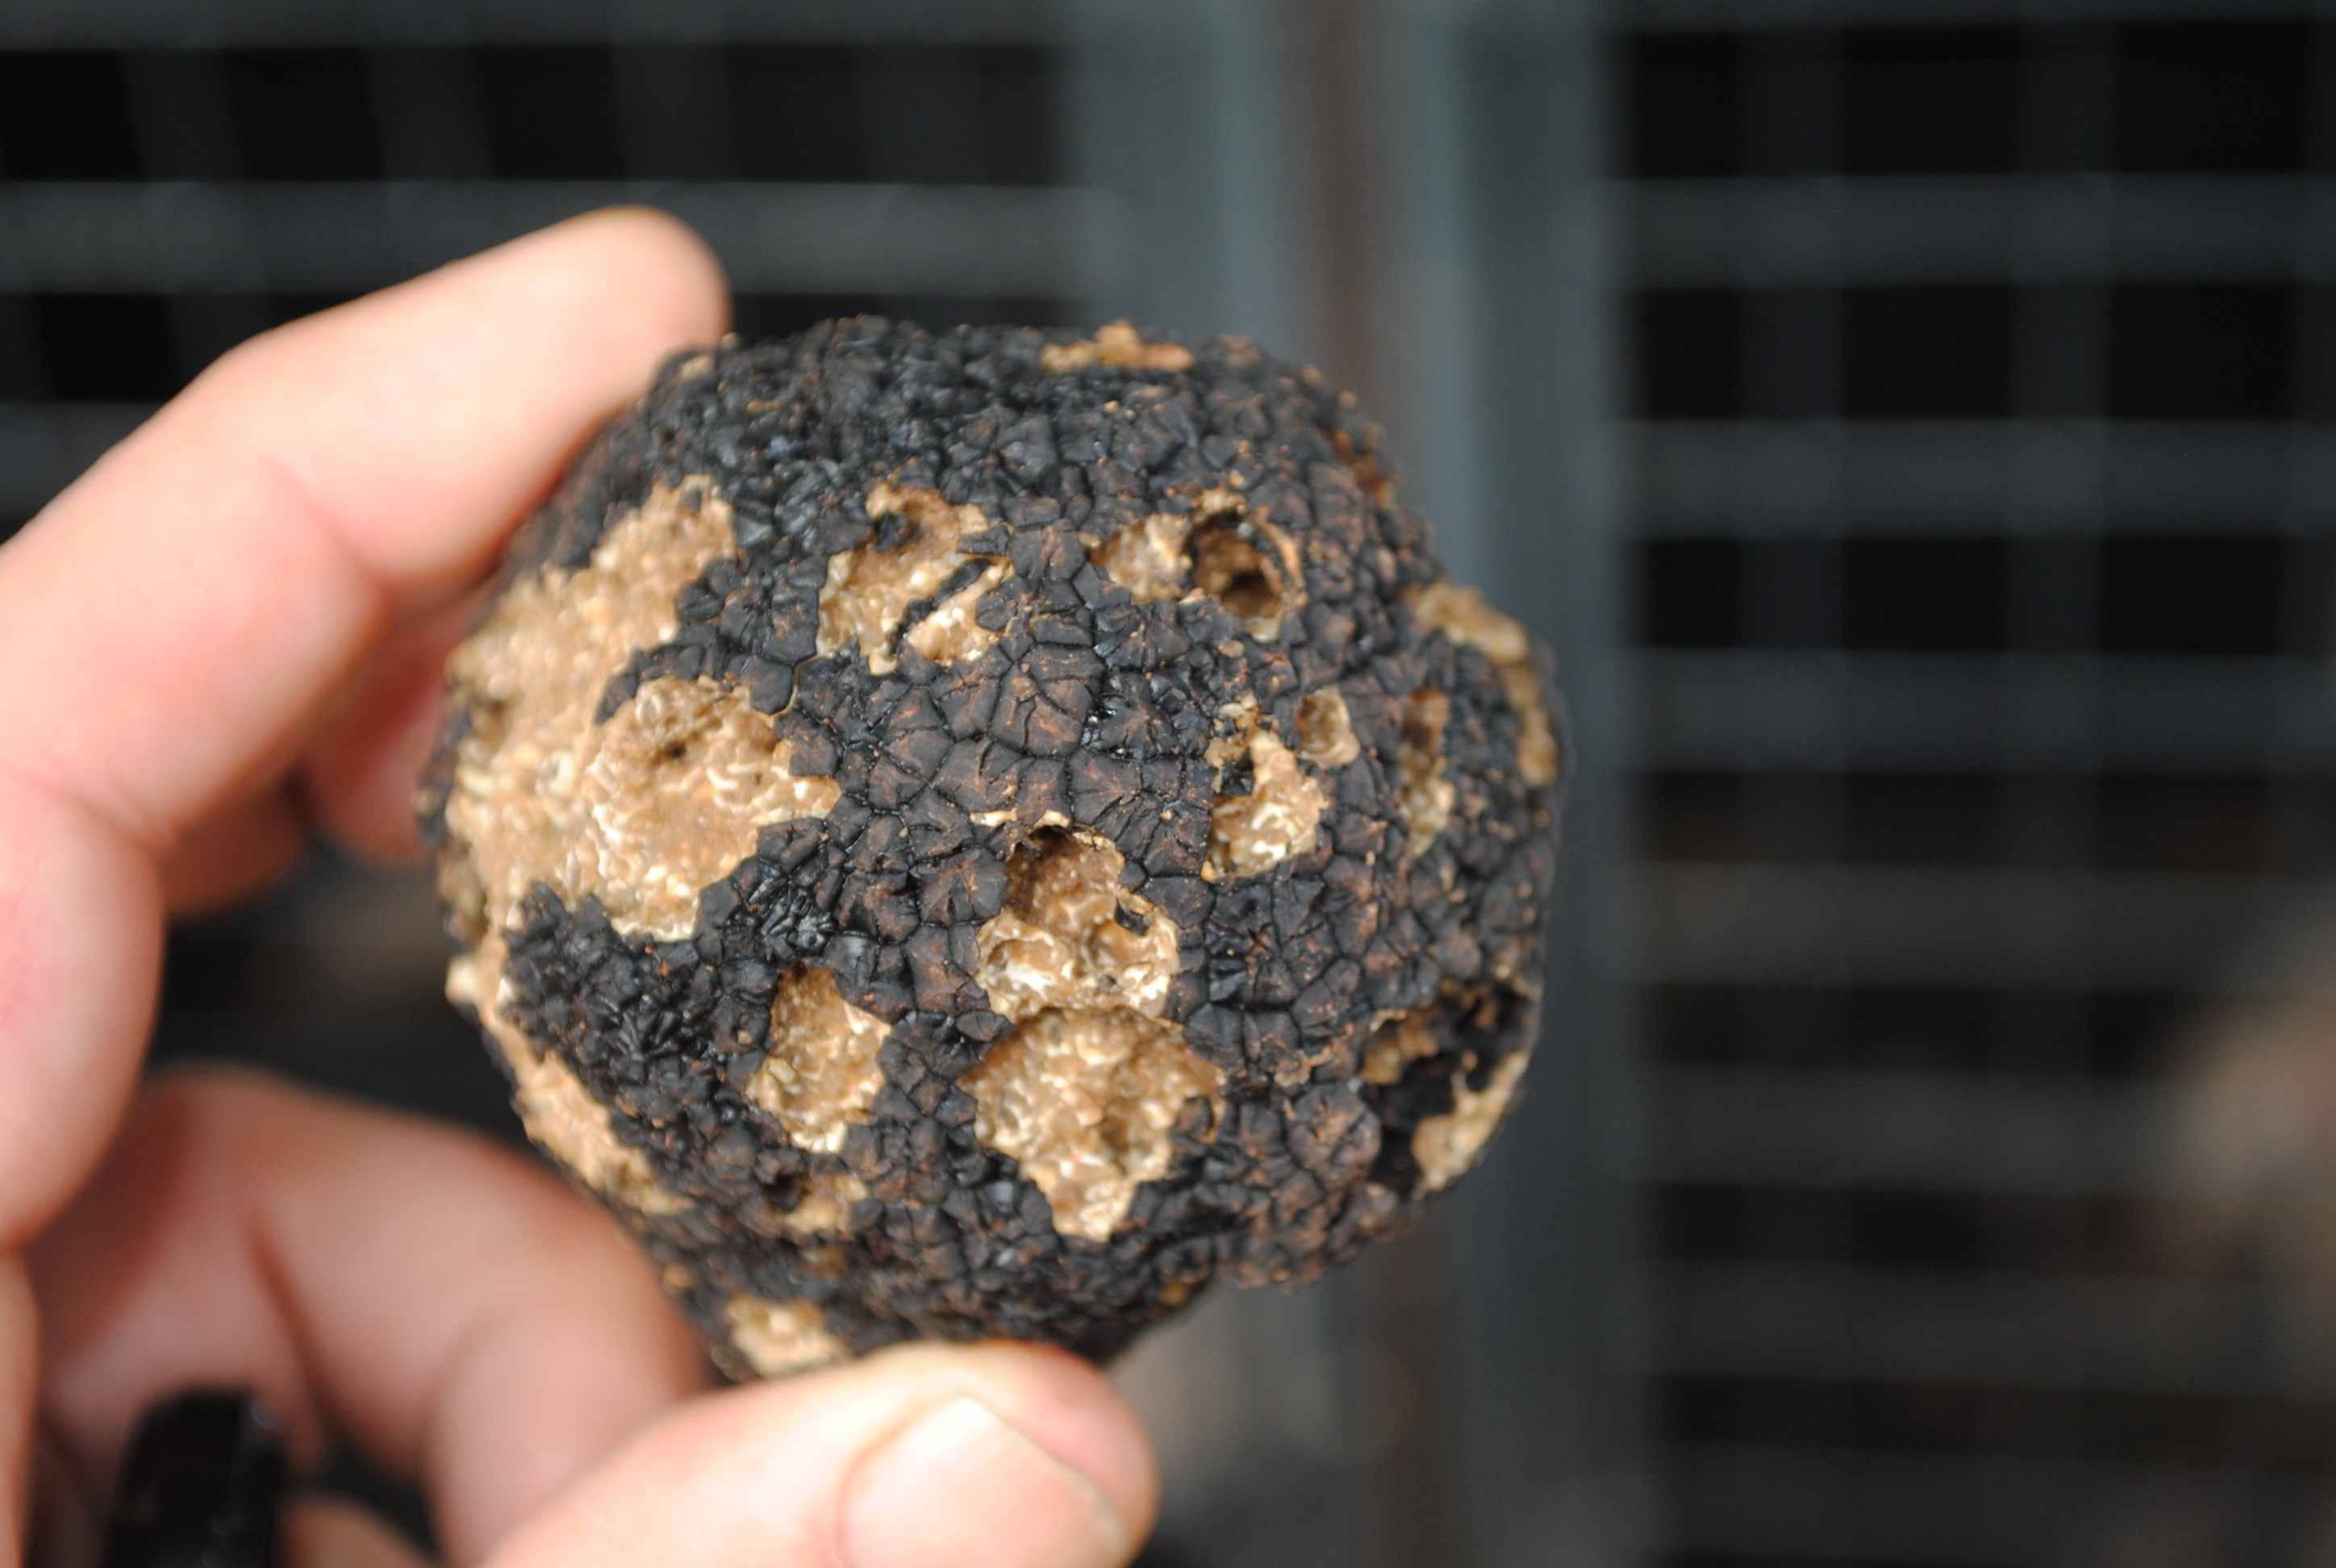 Black truffle damaged by a beetle